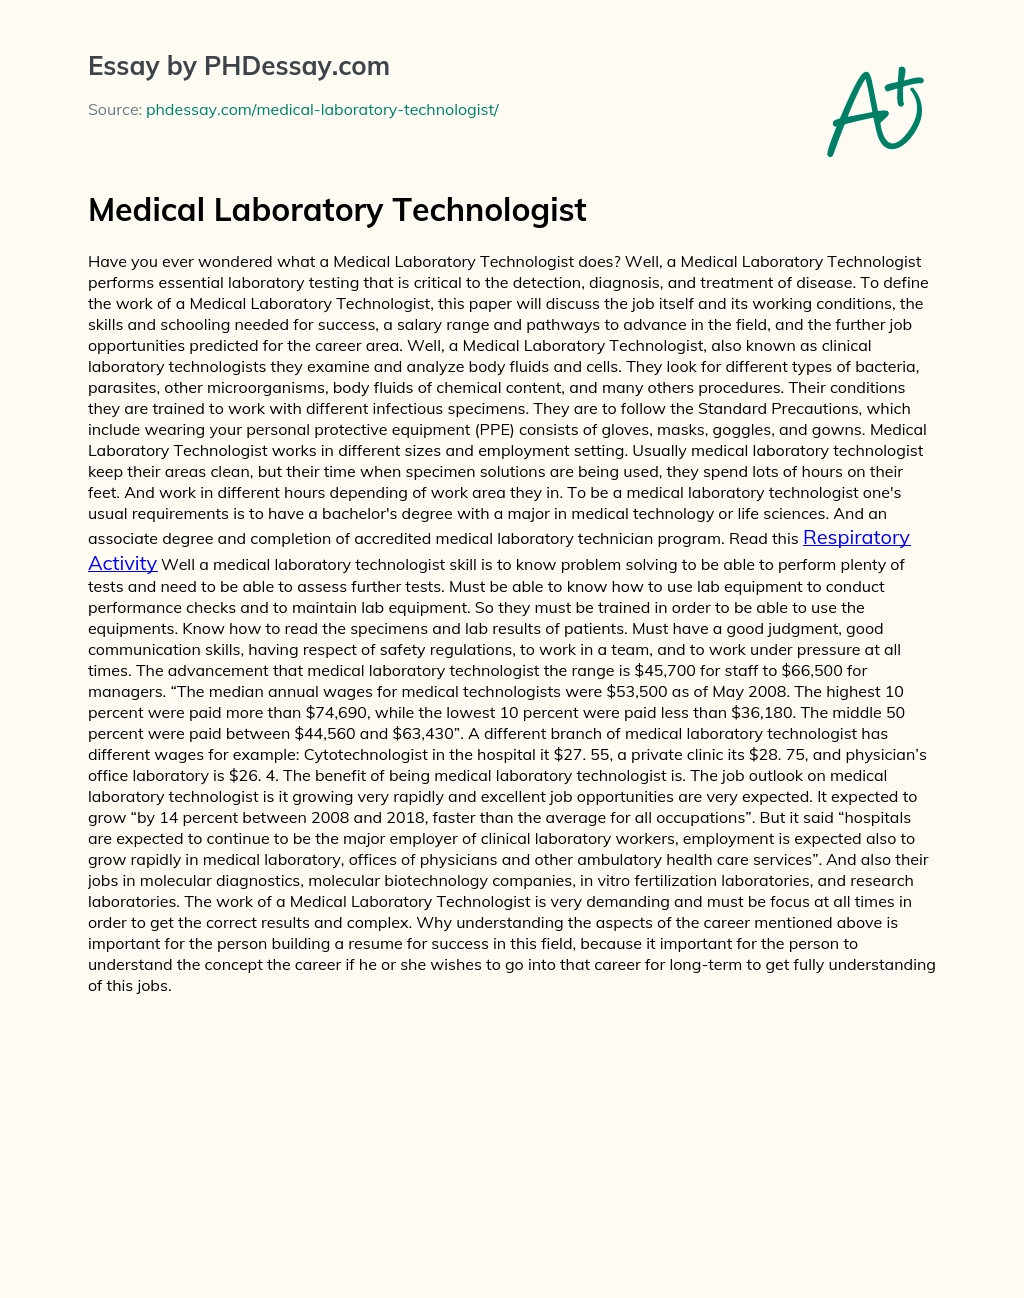 Medical Laboratory Technologist essay